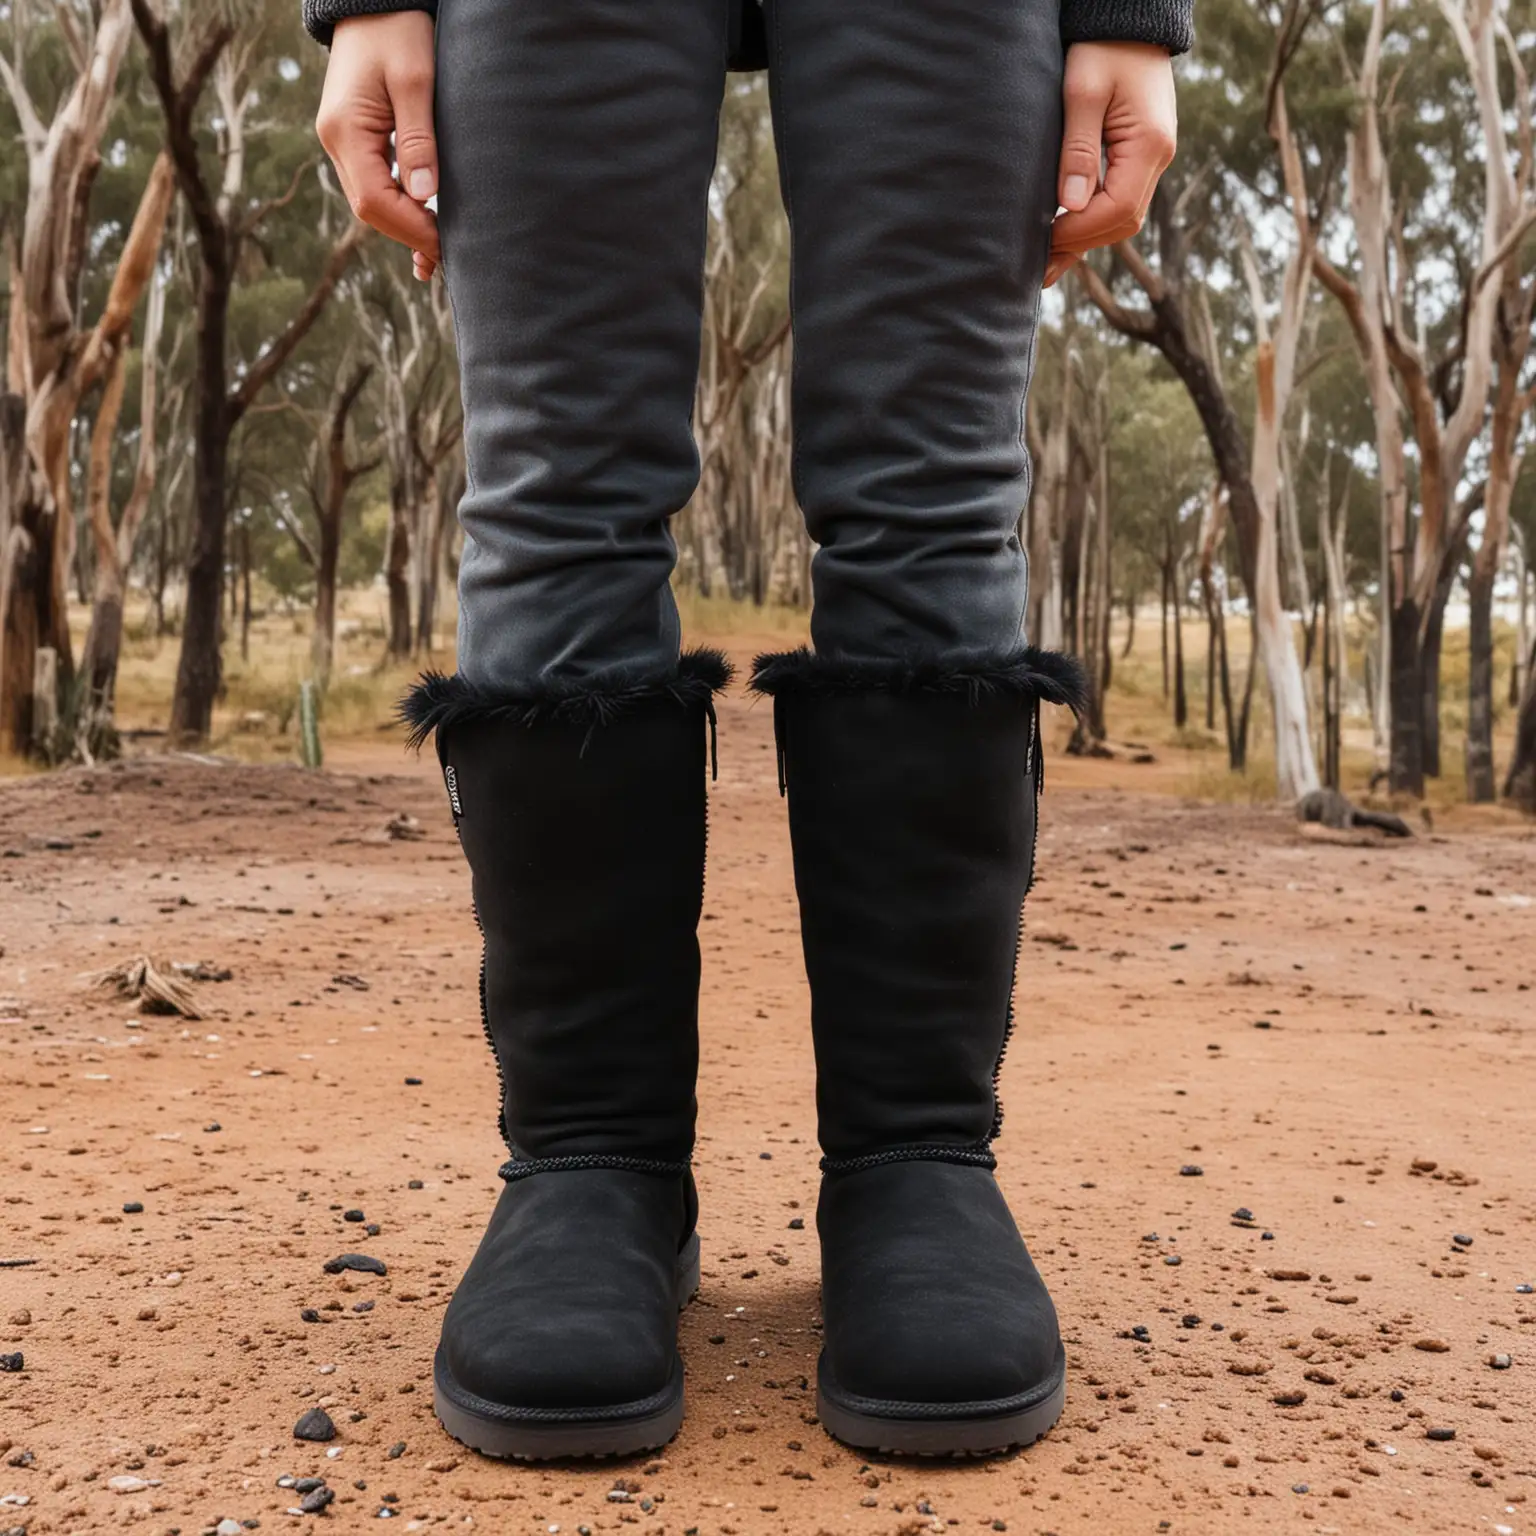 a person wearing Emu Australia black Ugg Boots